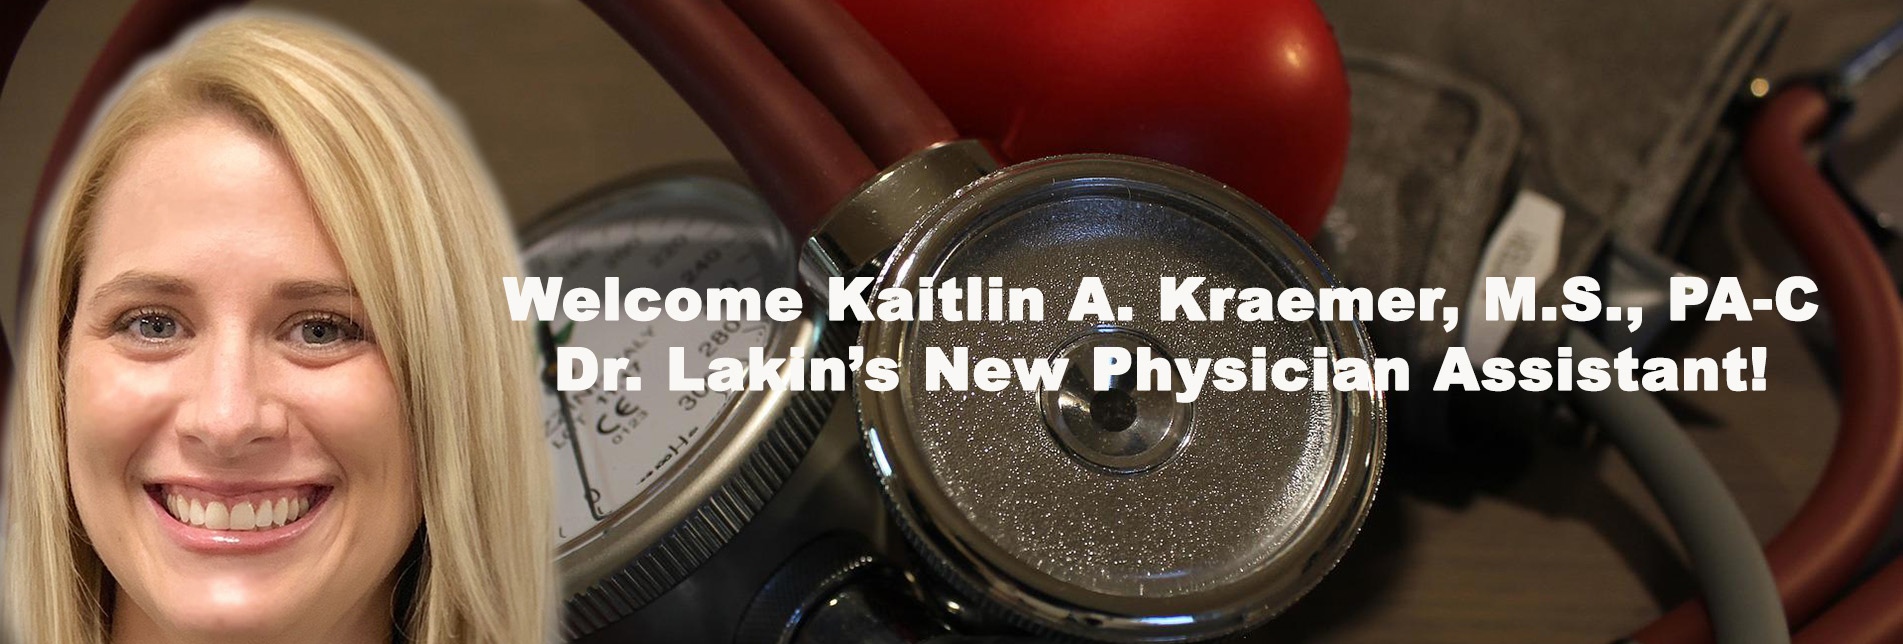 Welcome Kaitlin A. Kraemer, M.S., PA-C